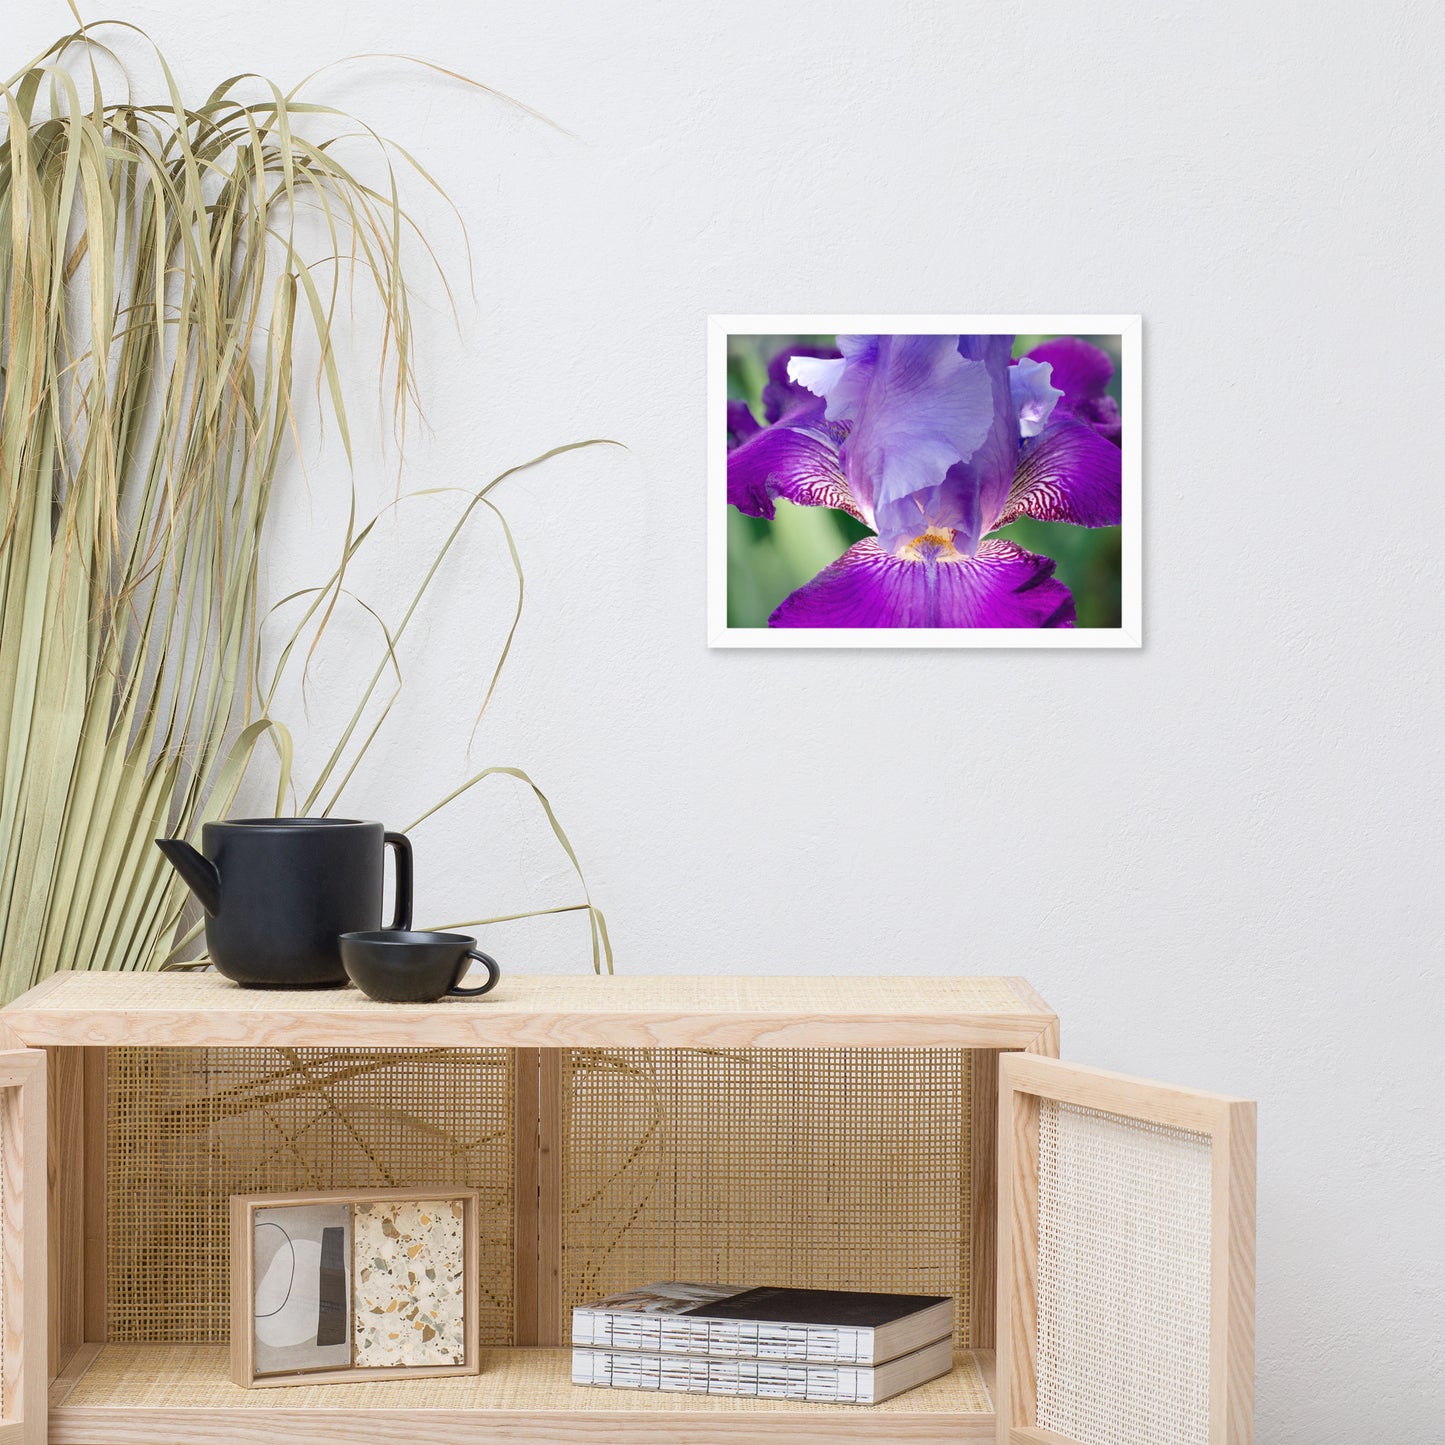 Etsy Bedroom Prints: Glowing Iris - Floral / Botanical / Nature Photo Framed Wall Art Print - Artwork - Wall Decor - Modern Home Decor